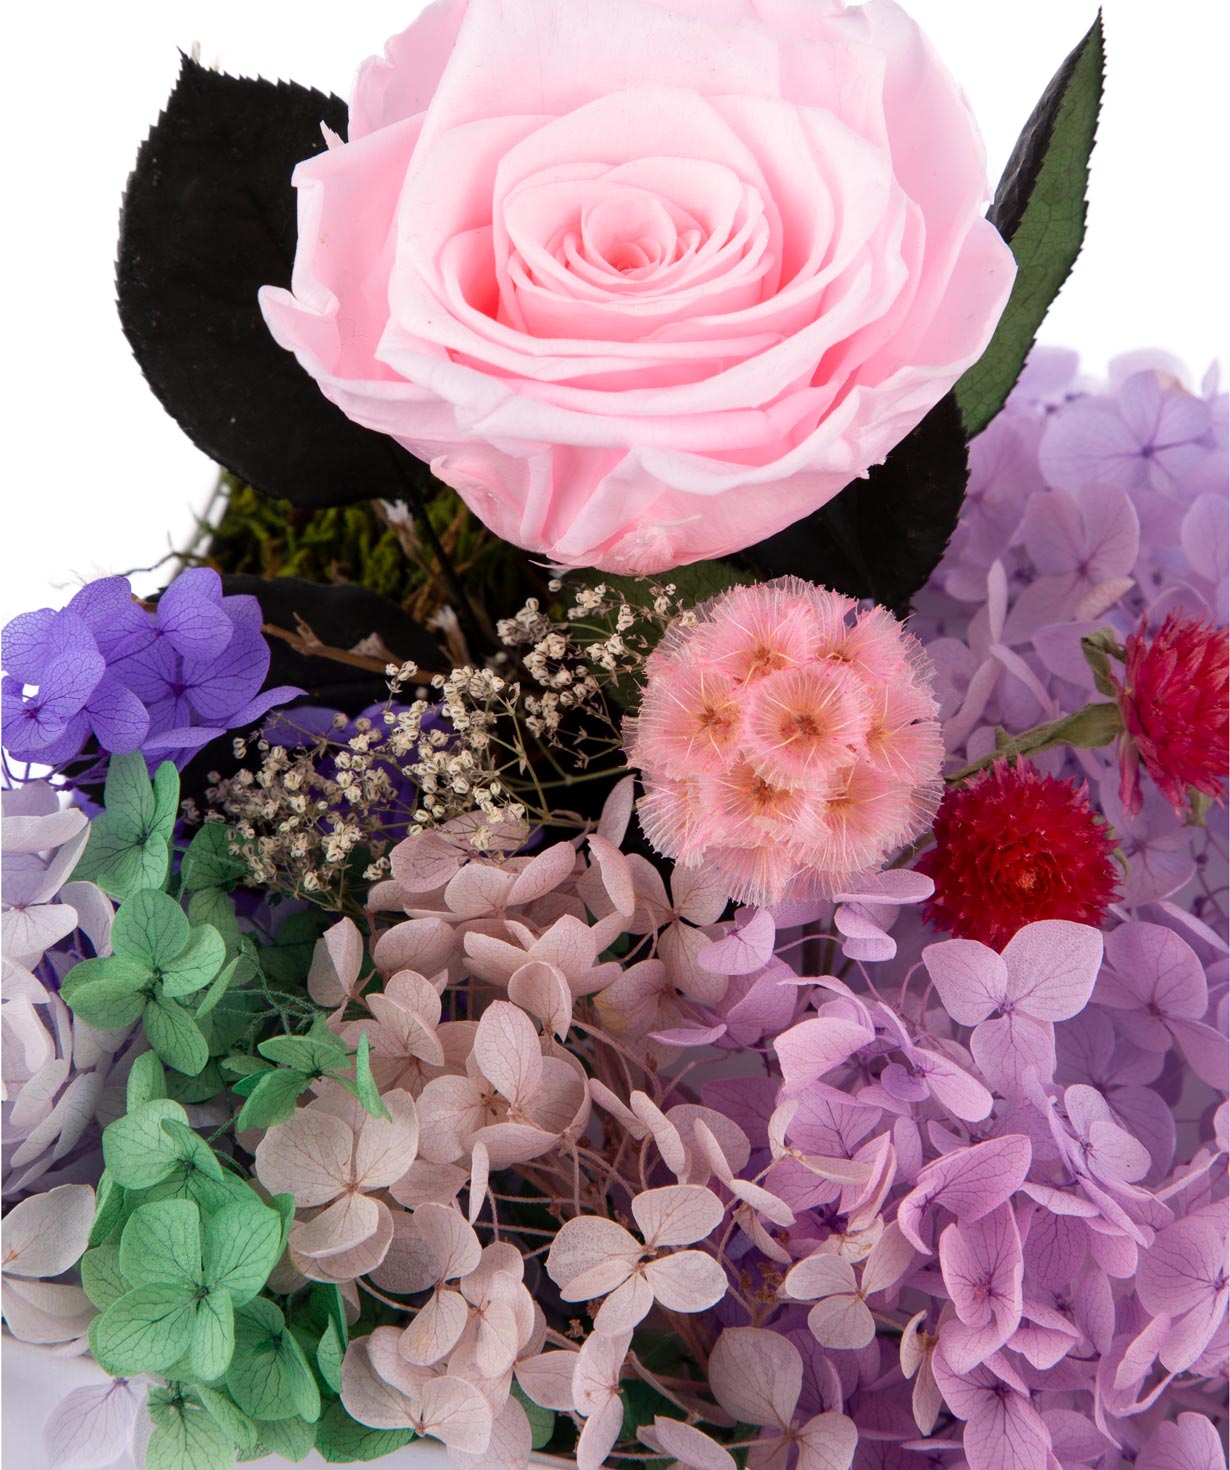 Bouquet `EM Flowers` eternal N3